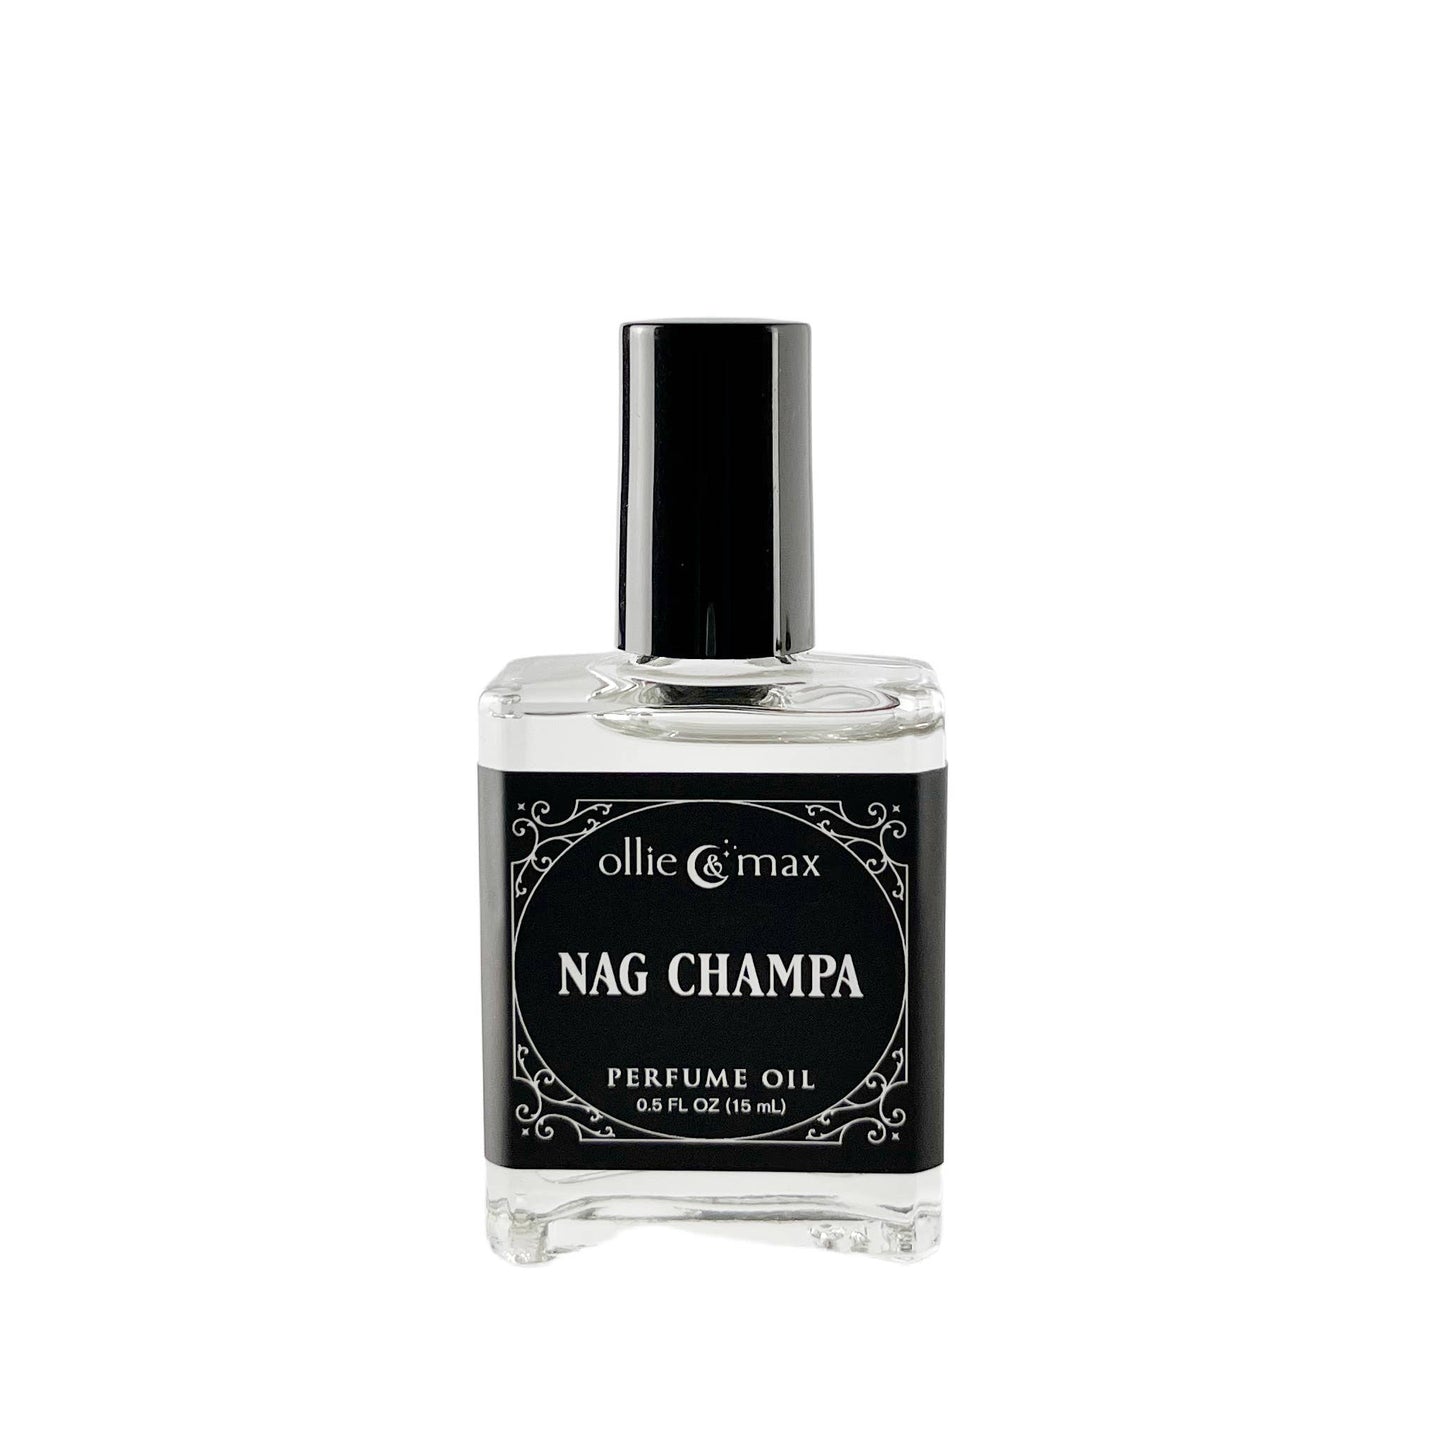 Nag Champa Vegan Perfume oil - La De Da